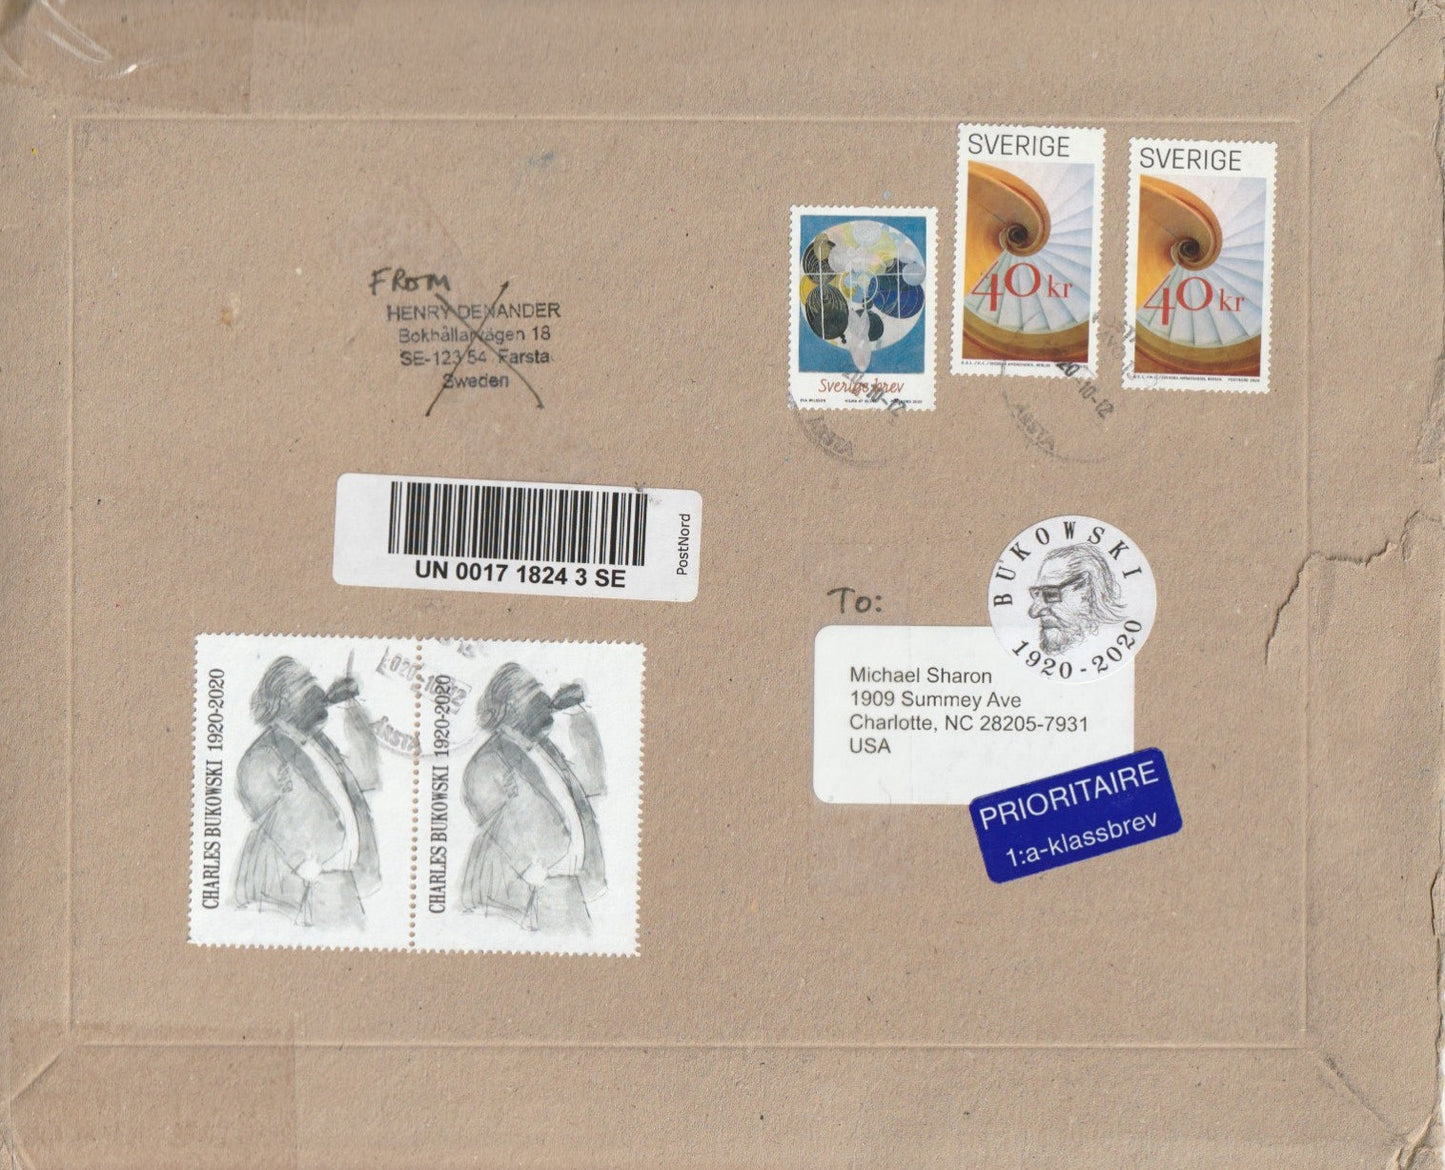 Bukowski Commemorative Stamps From Sweden